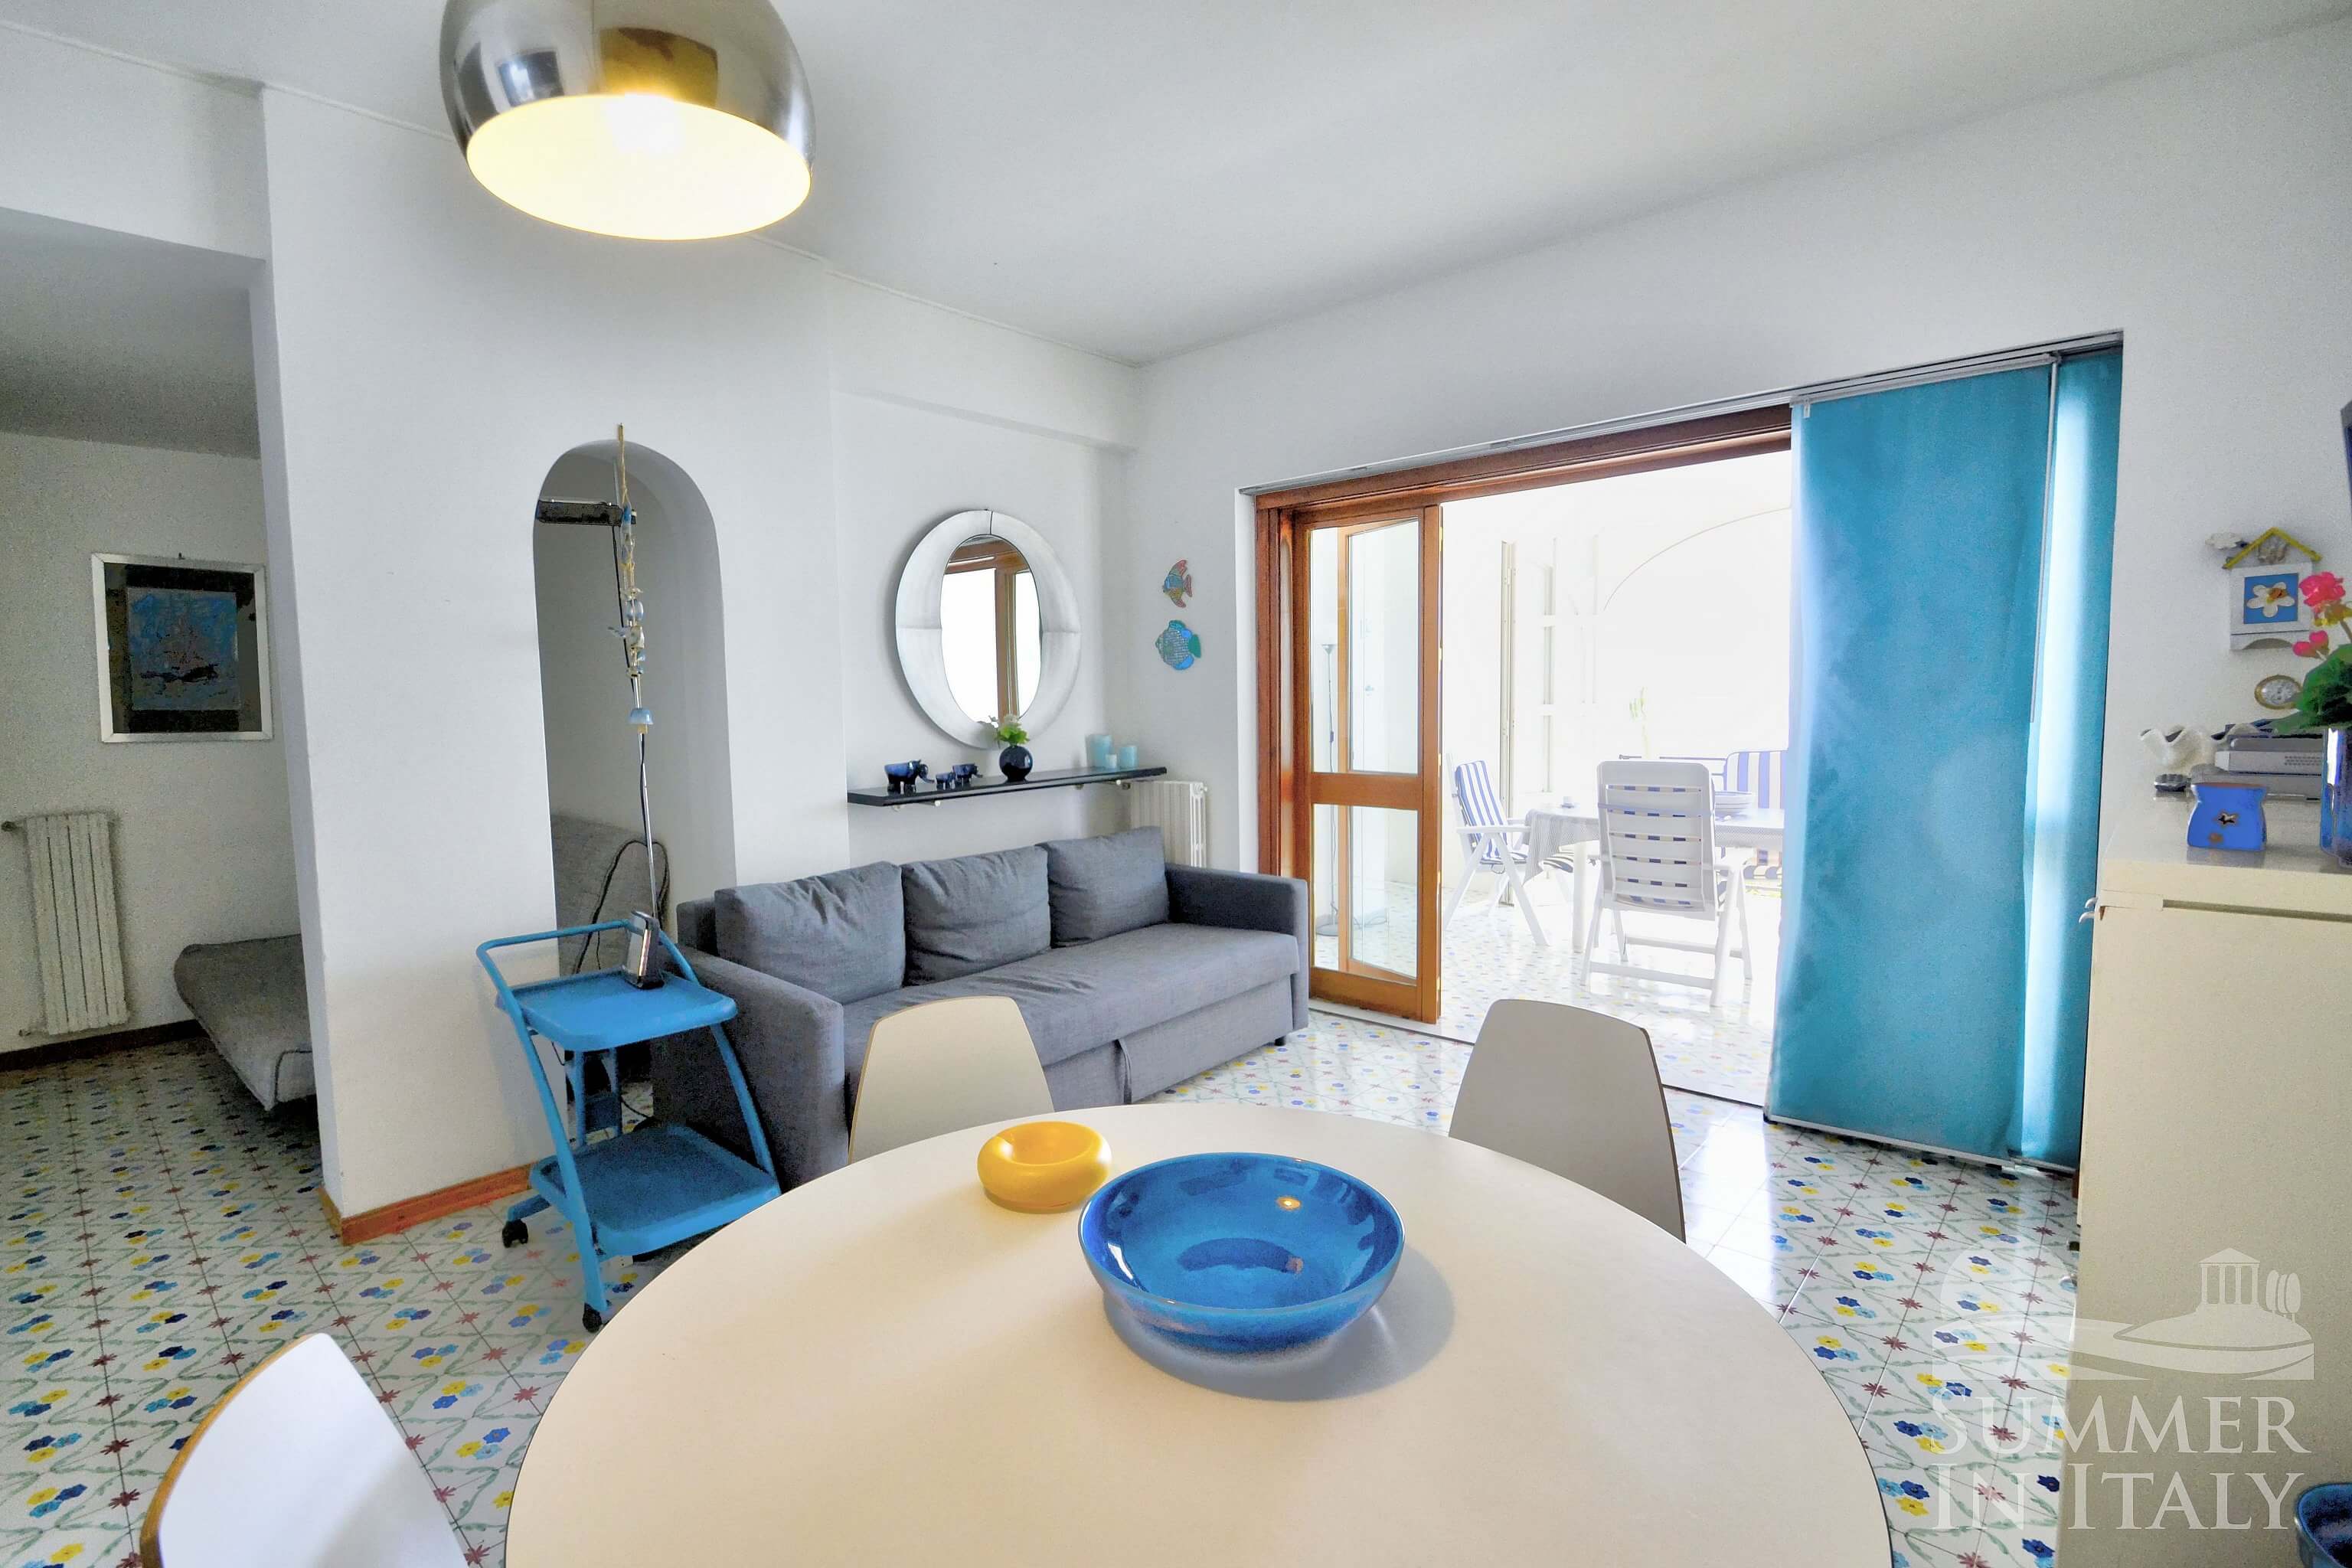 Casa Giasone: Self catering apartment in Praiano, Amalfi Coast, Italy